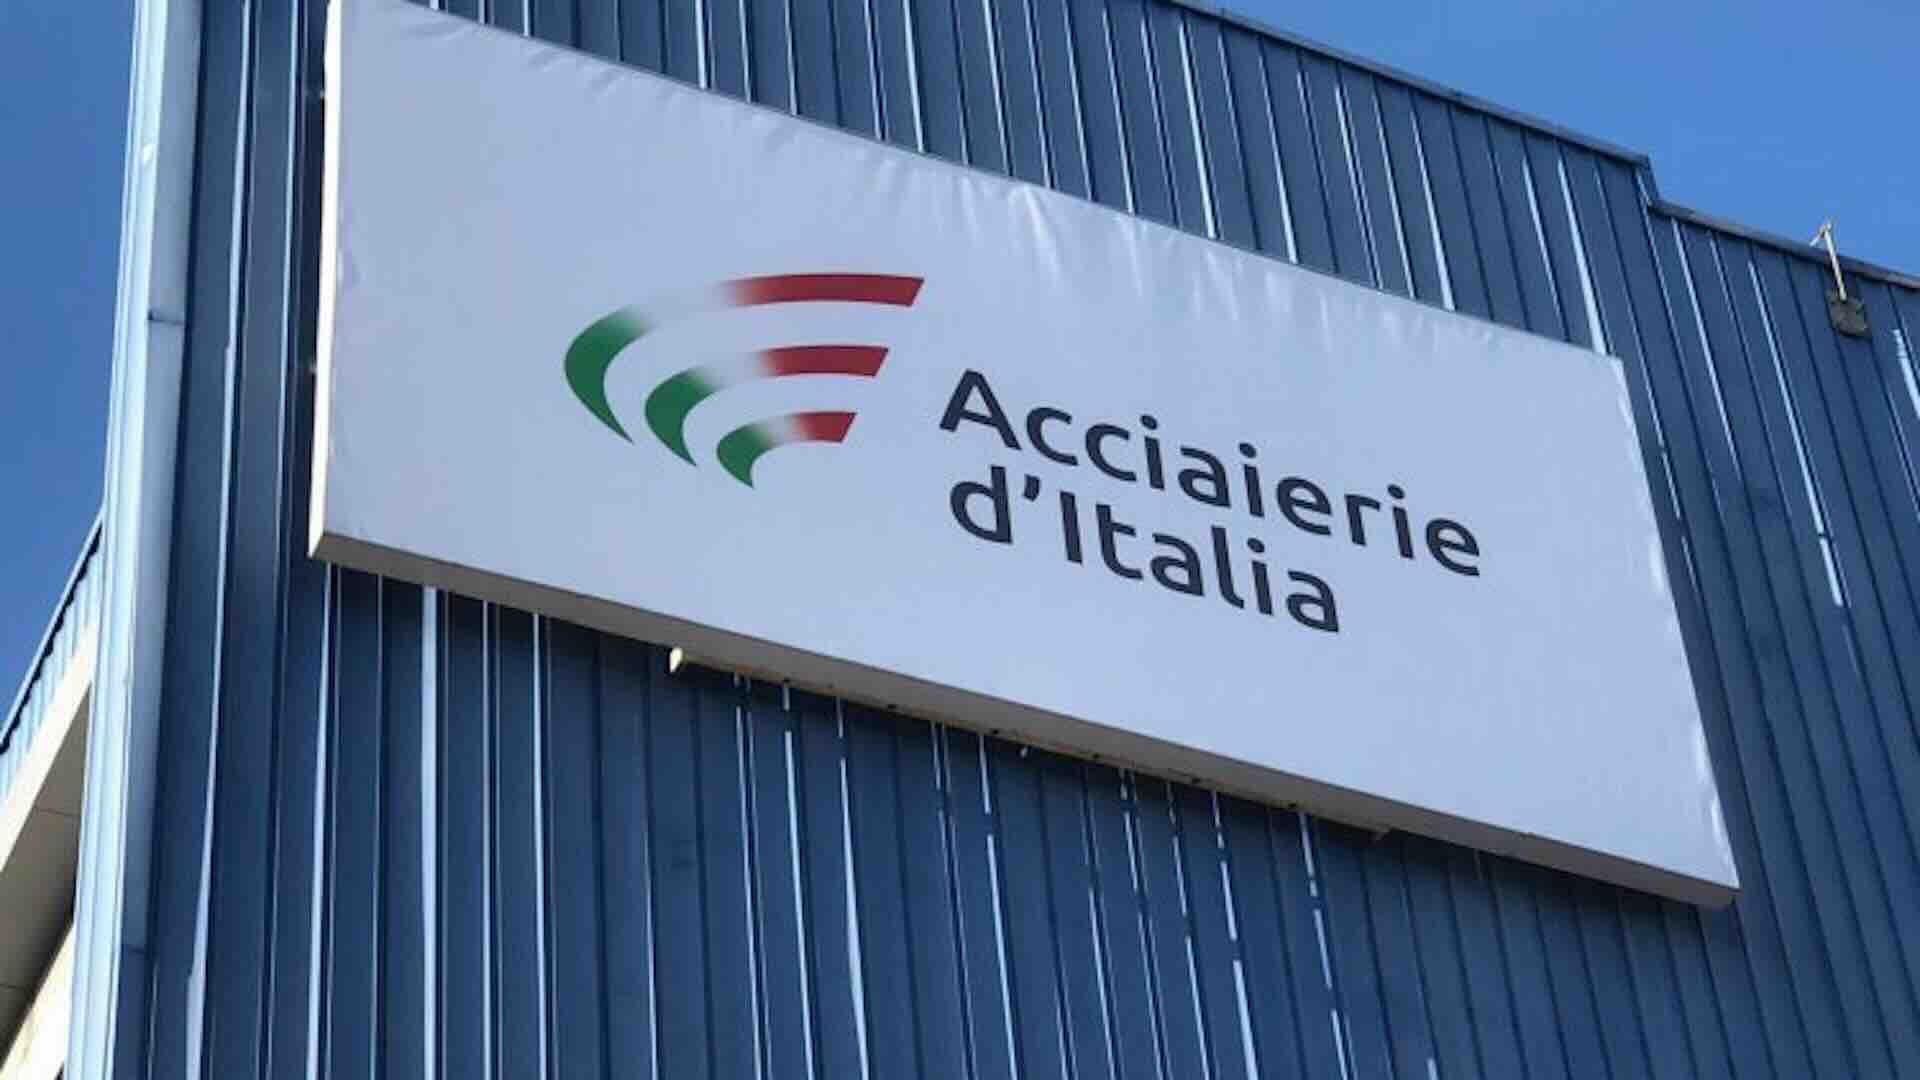 Autotrasportatori, Acciaierie d’Italia: lettera aperta di UNATRAS